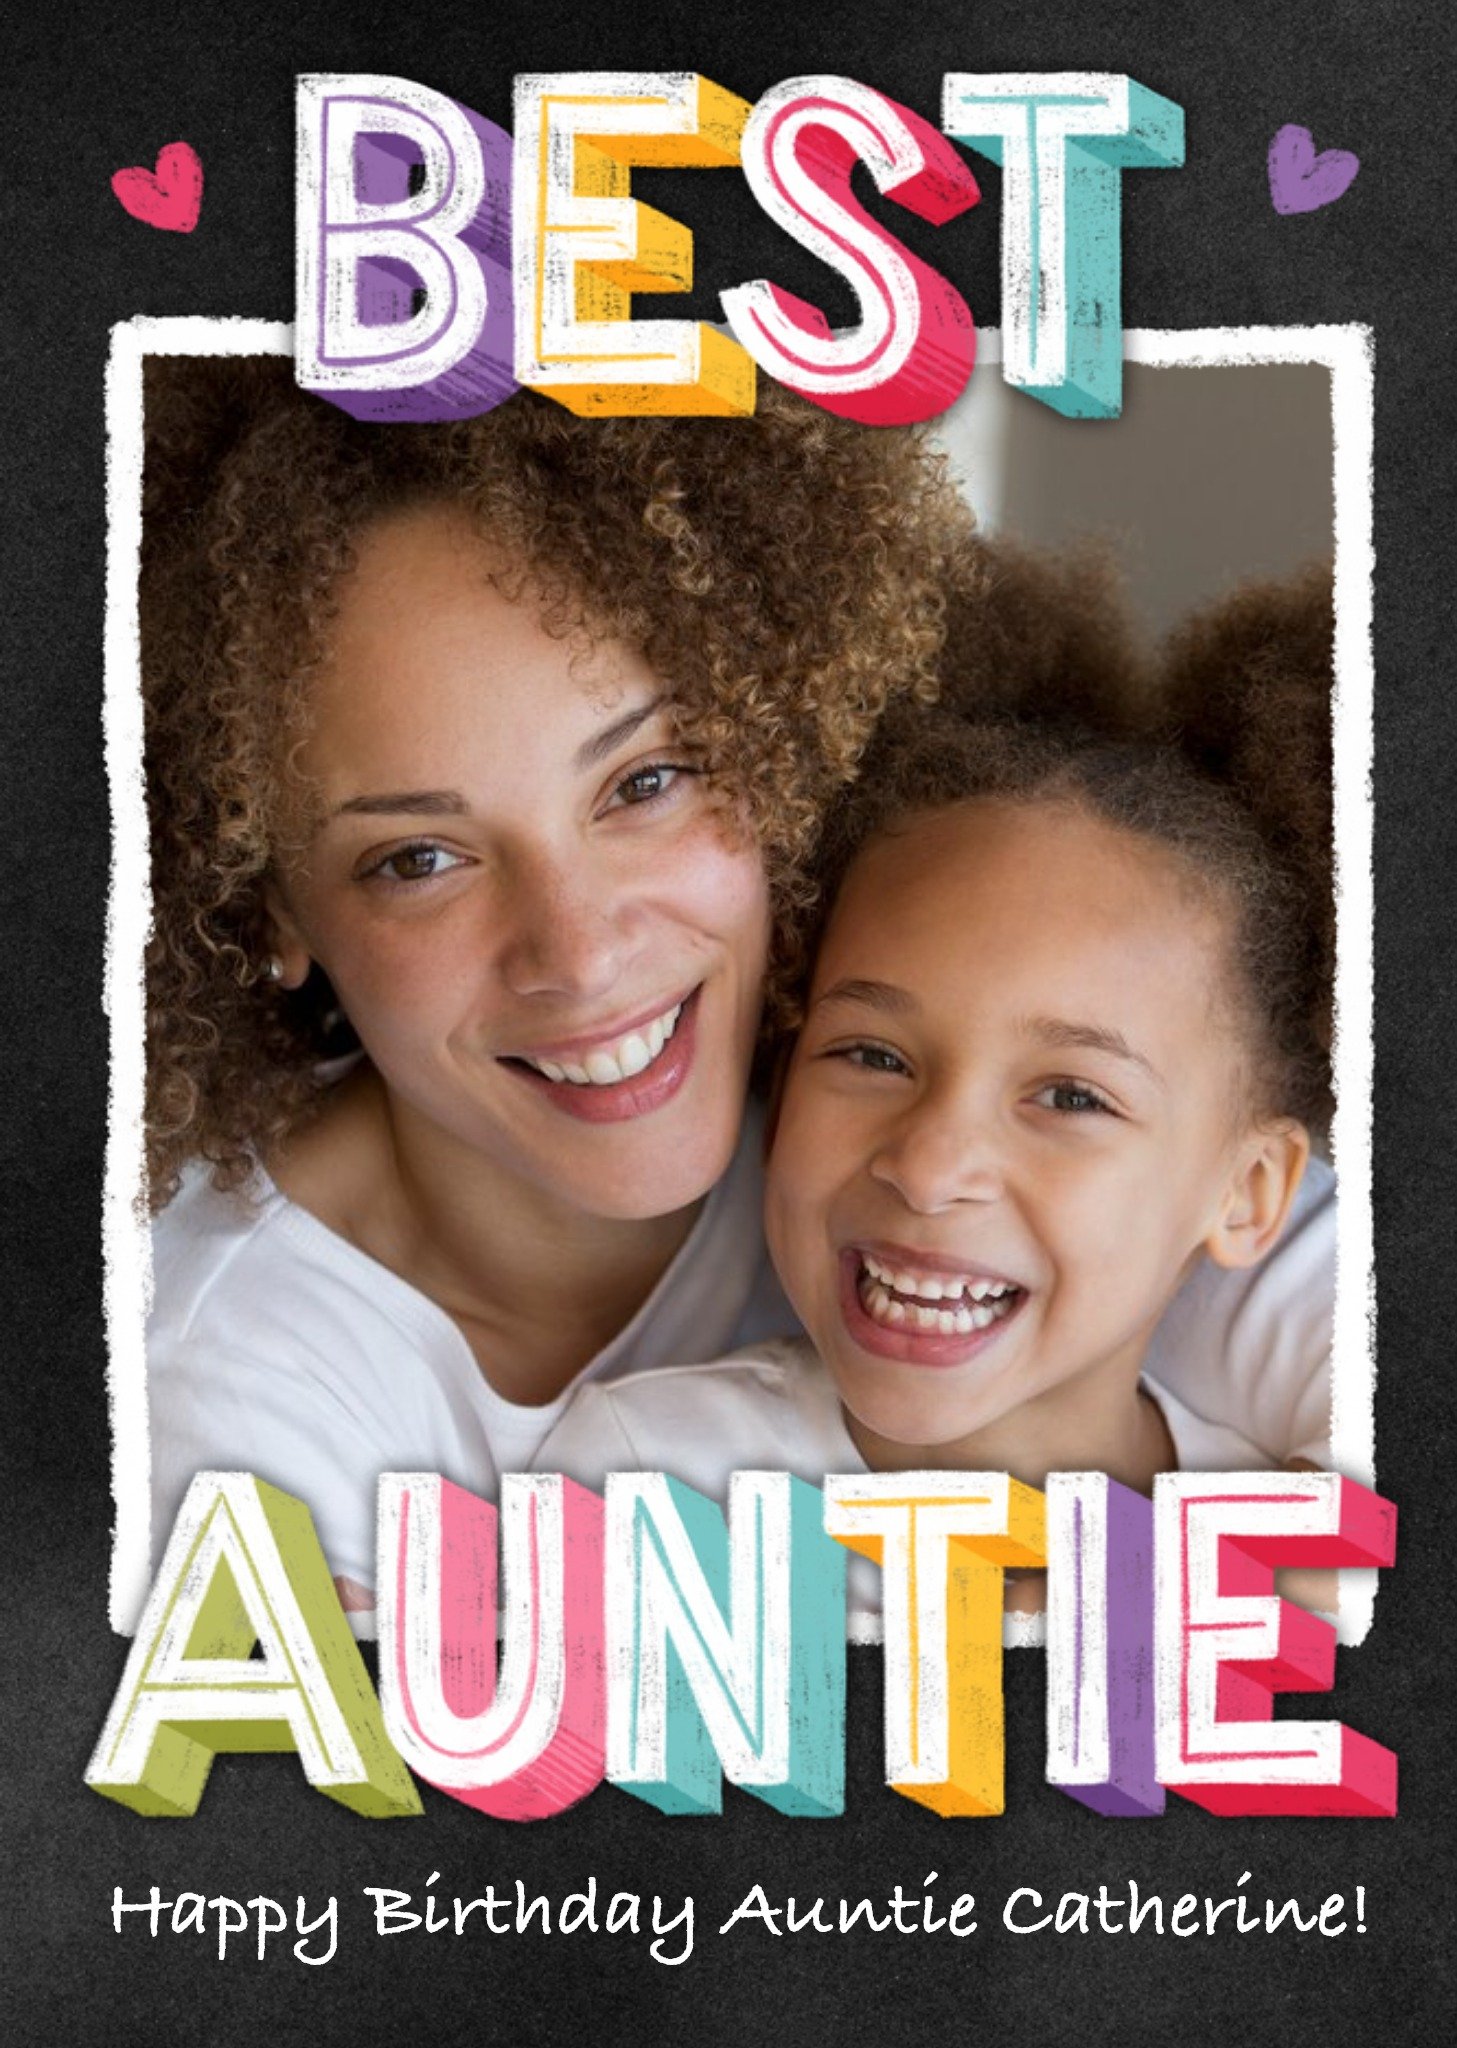 Moonpig Best Auntie Birthday Card - Chalk Lettering - Photo Upload, Large